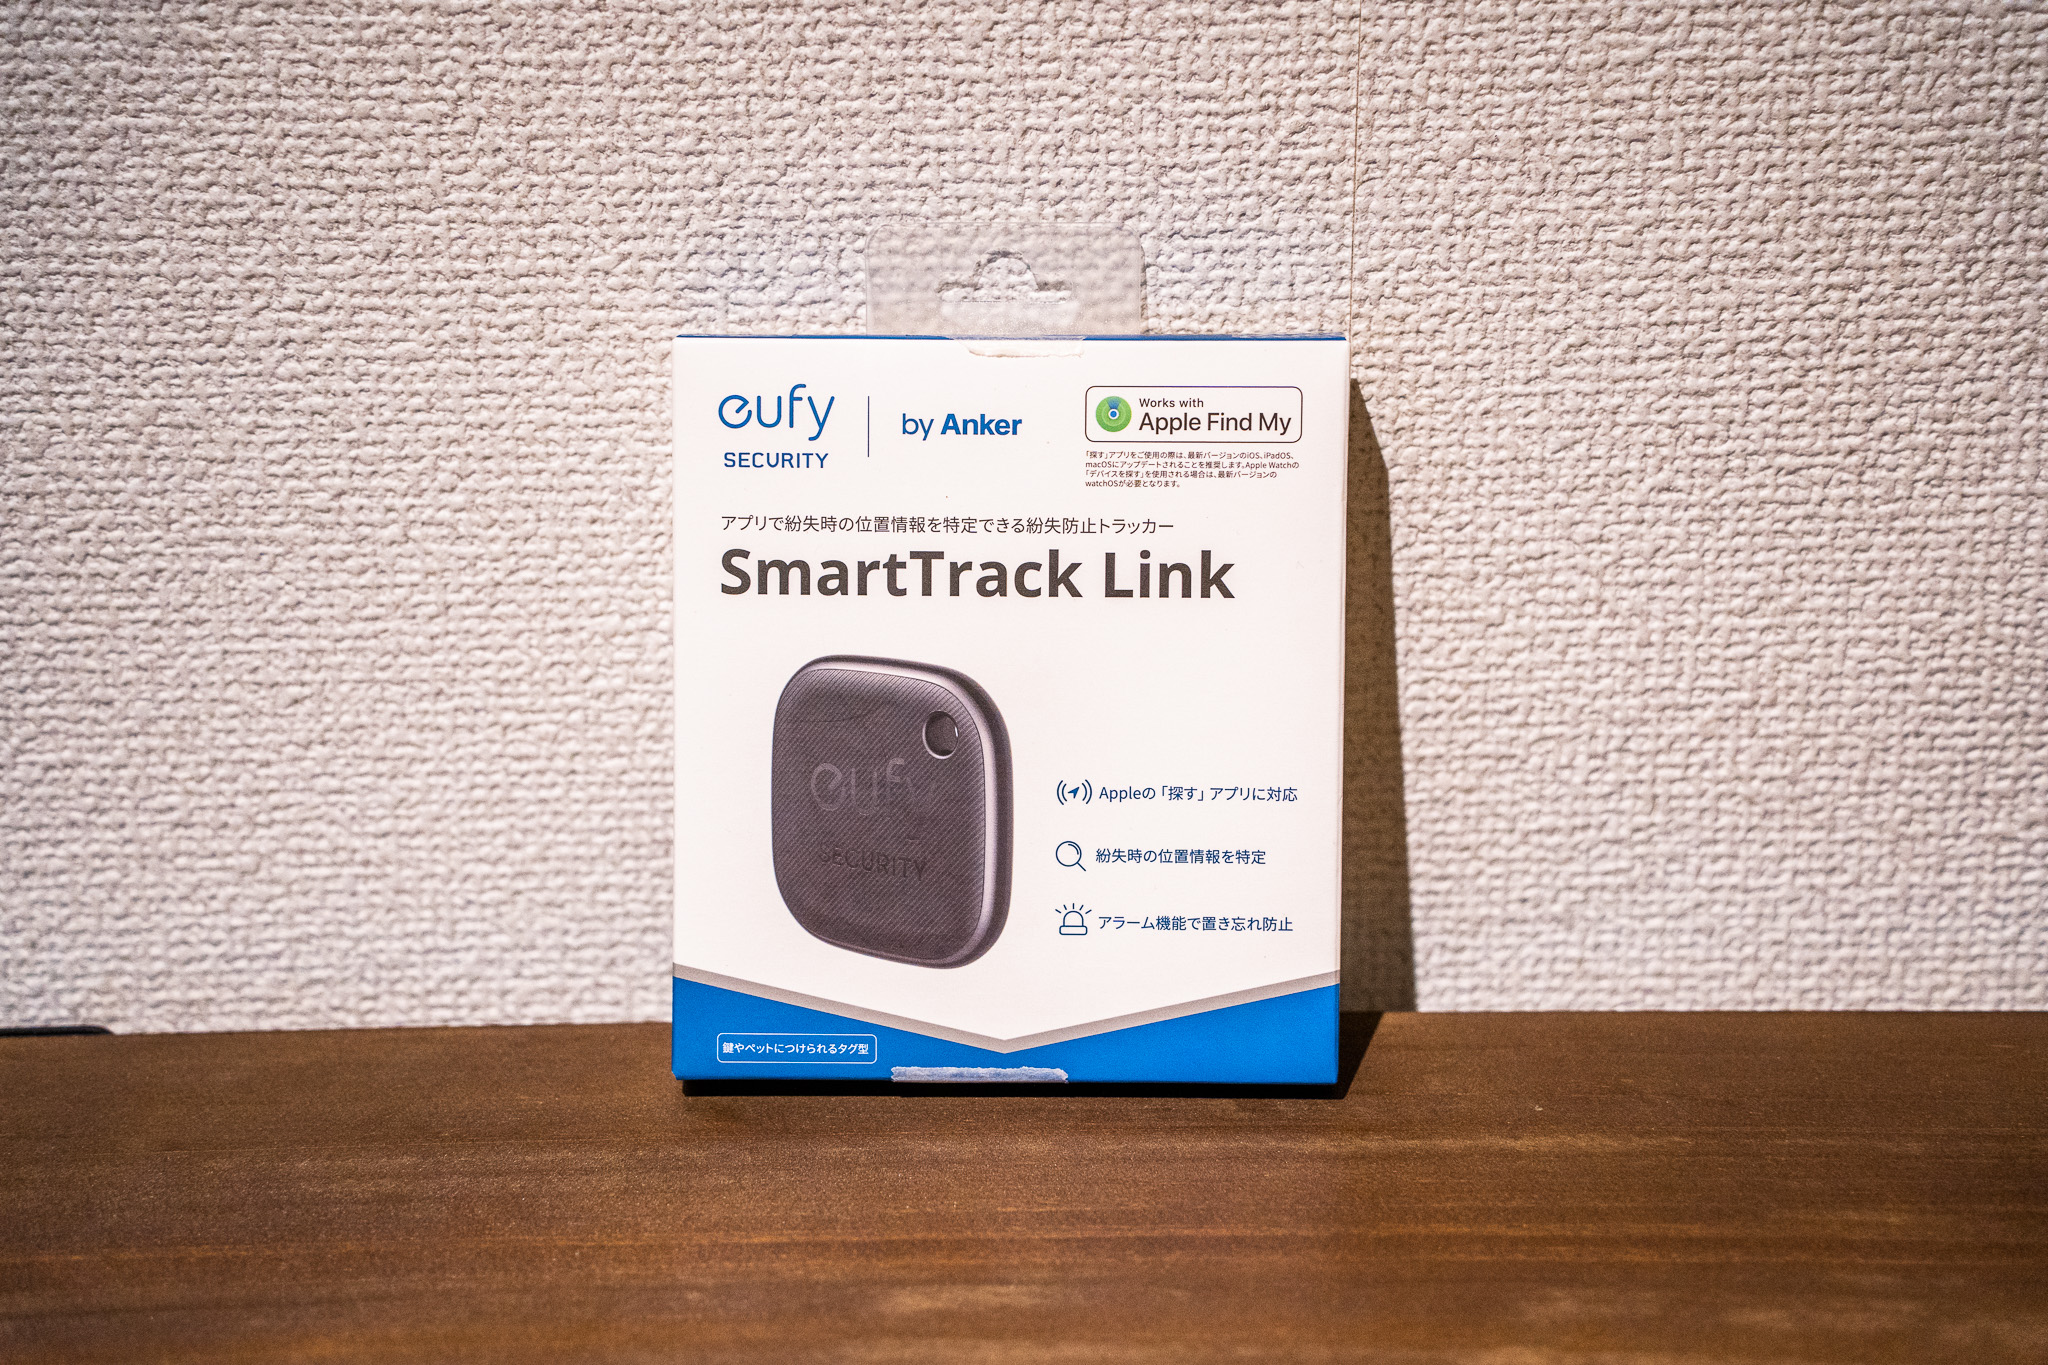 Anker Eufy (ユーフィ) Security SmartTrack Link